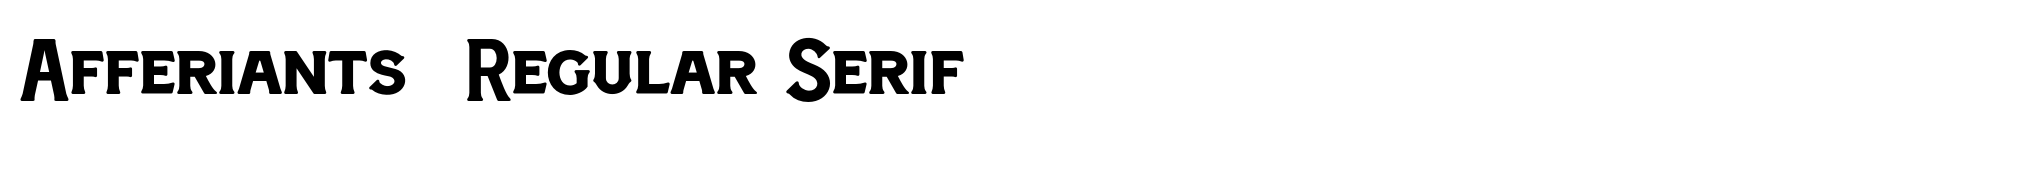 Afferiants  Regular Serif image